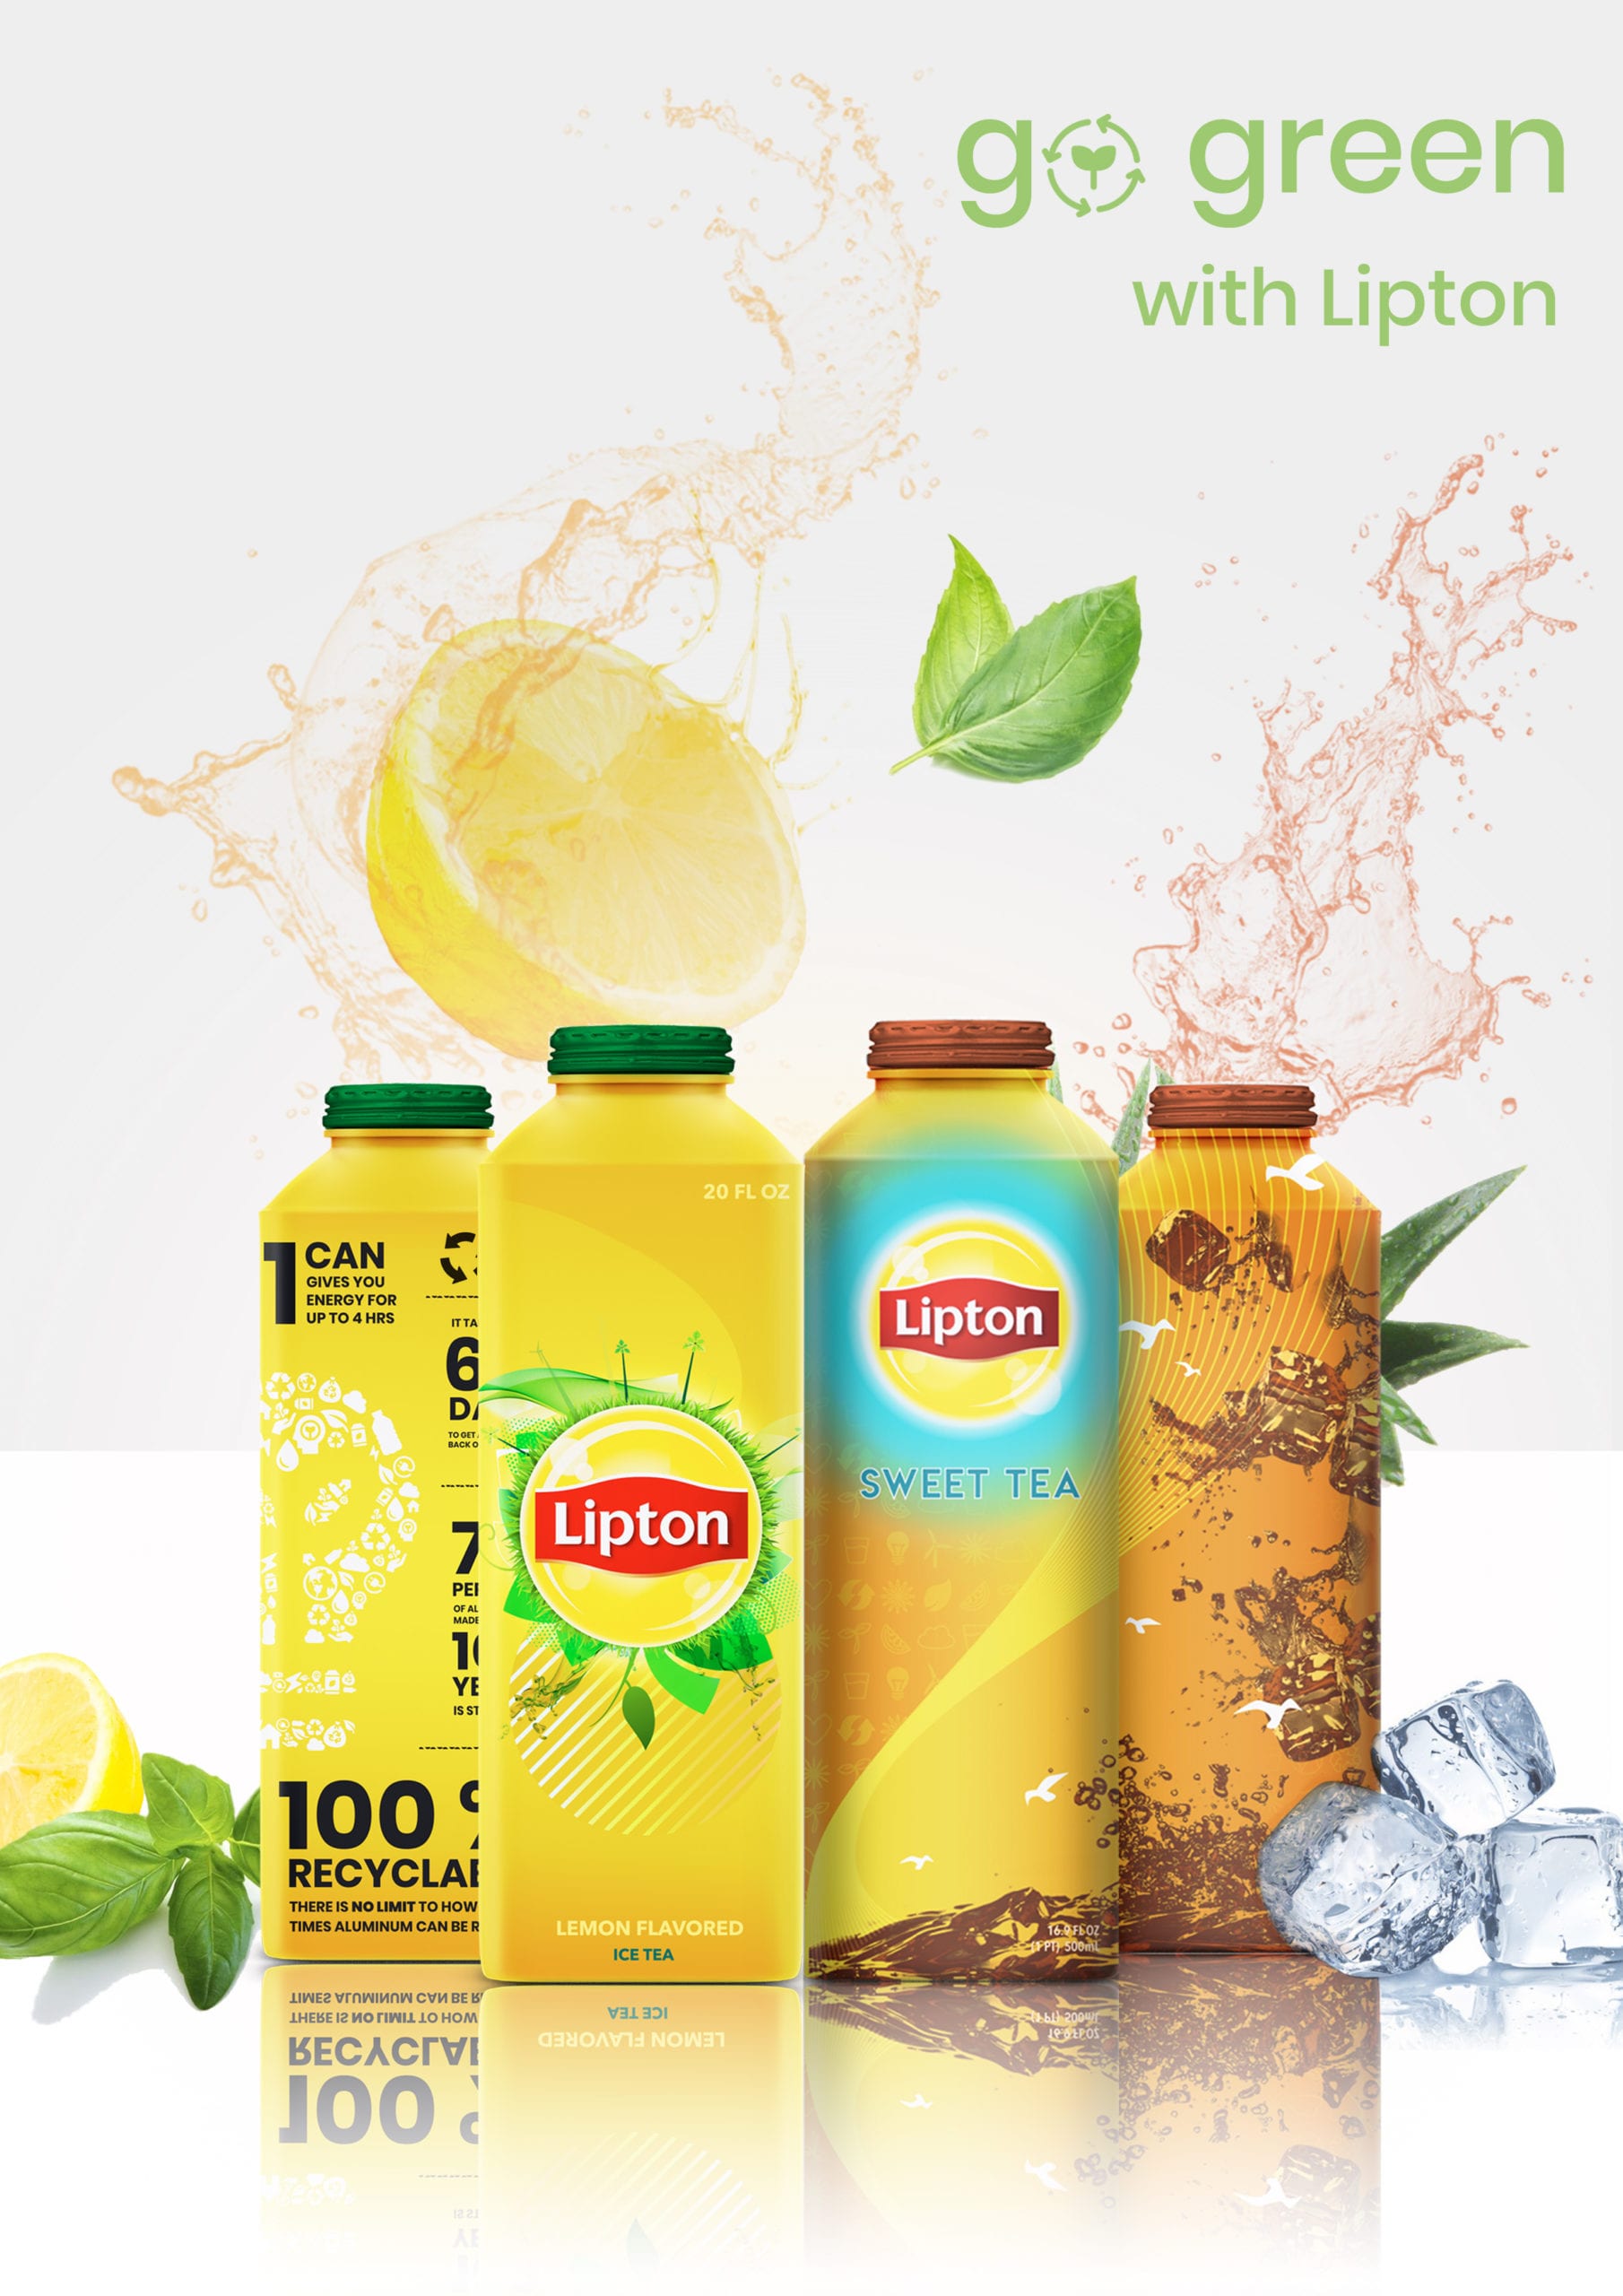 IU C&I Studios Portfolio and Page Lipton Iced Tea product packaging redesign creative marketing challenge